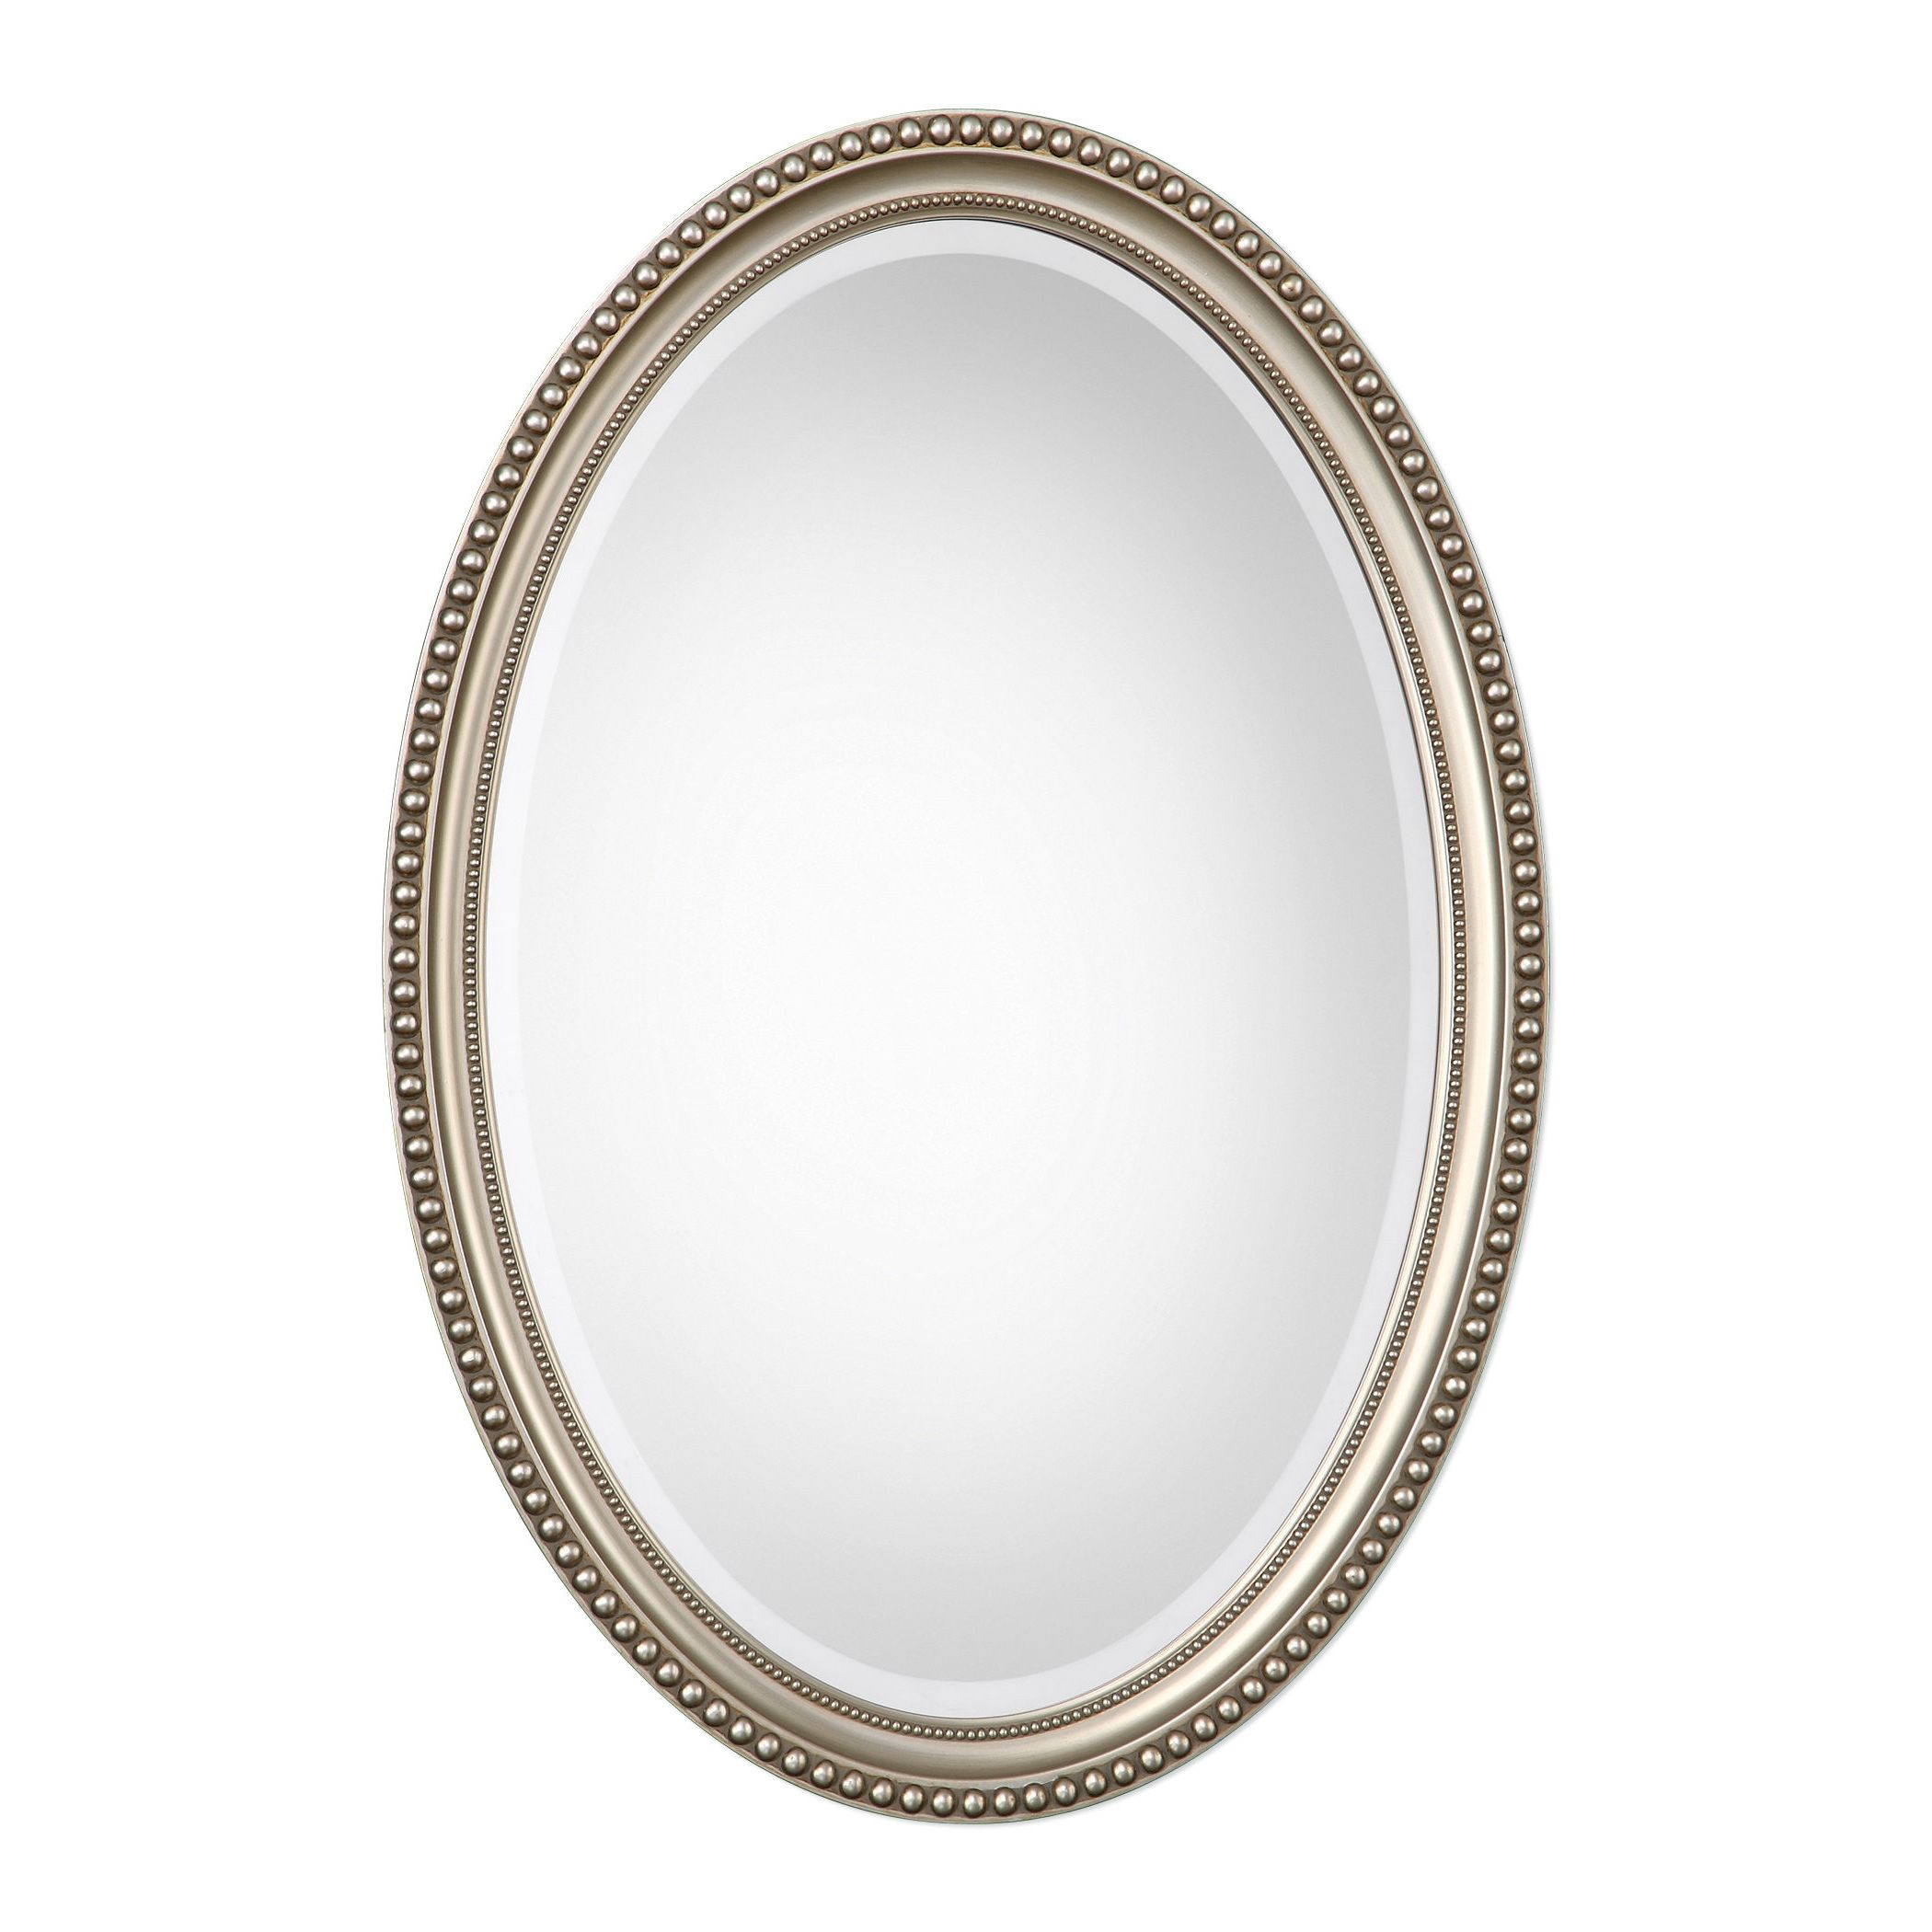 Oval Metallic Accent Mirrors Regarding Best And Newest Oval Metallic Accent Mirror (View 2 of 20)